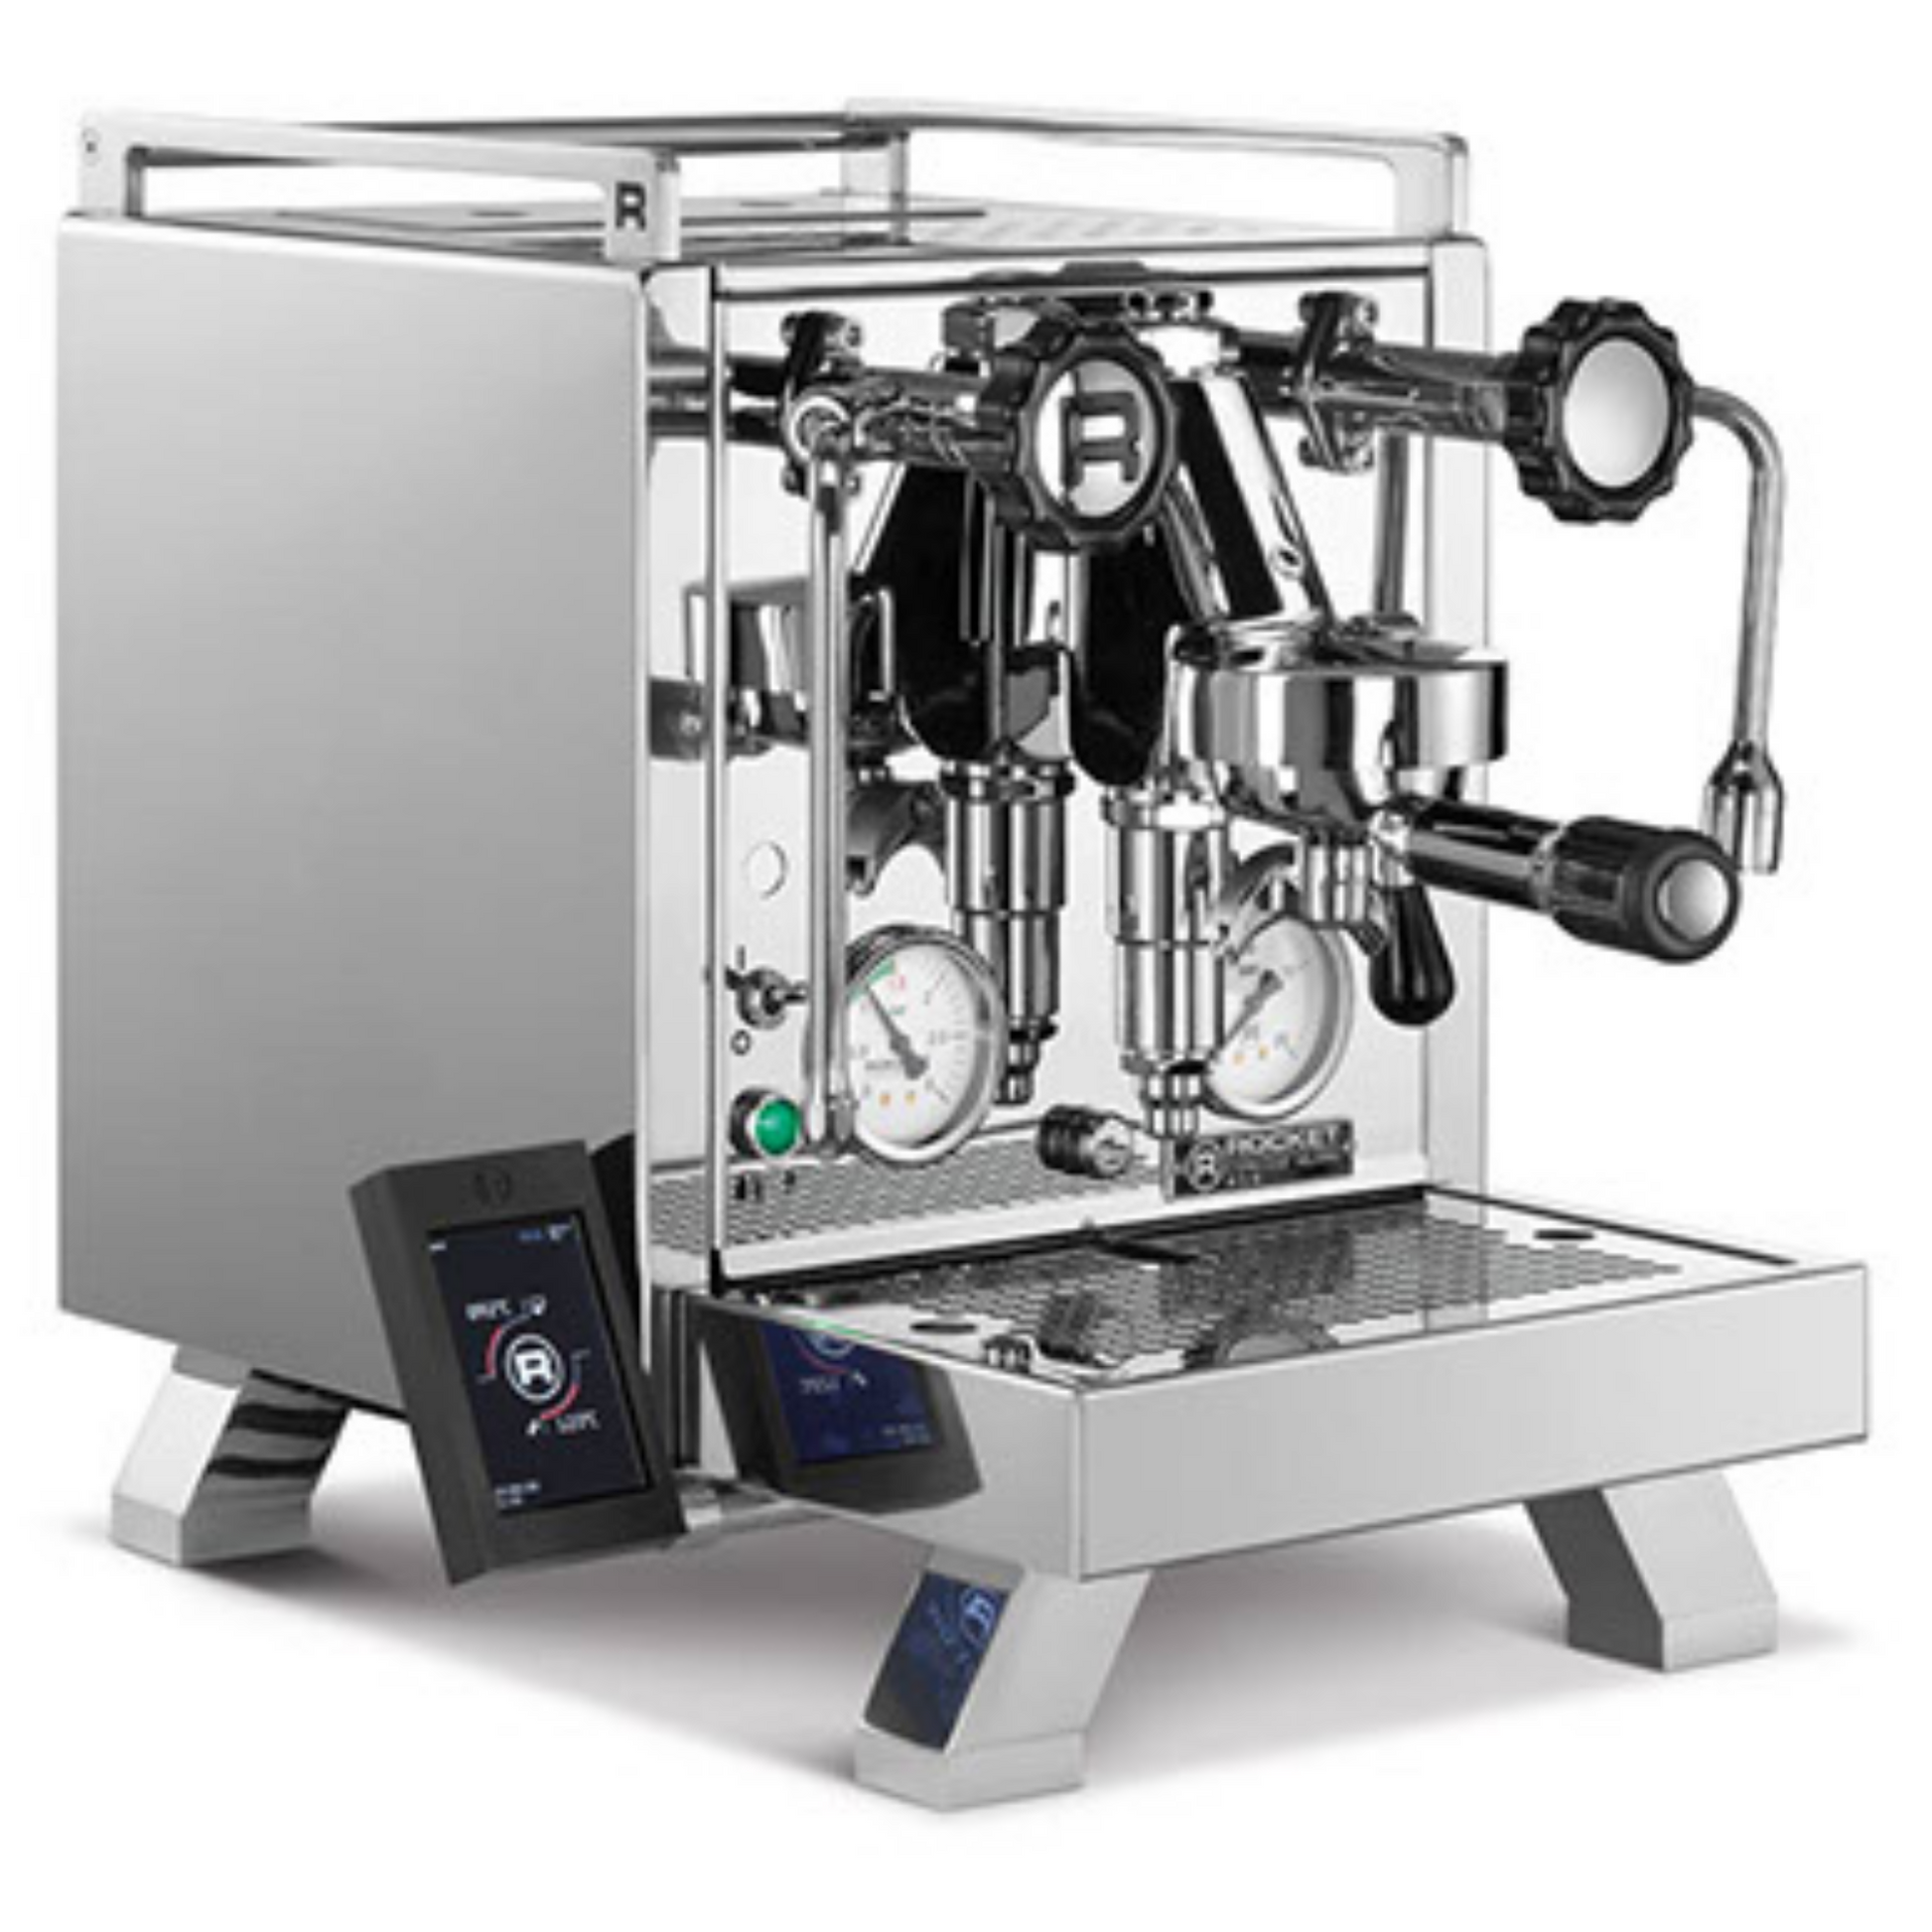 Rocket | R CINQUANTOTTO (R58) - 1GR - Manual Lever Espresso Machine